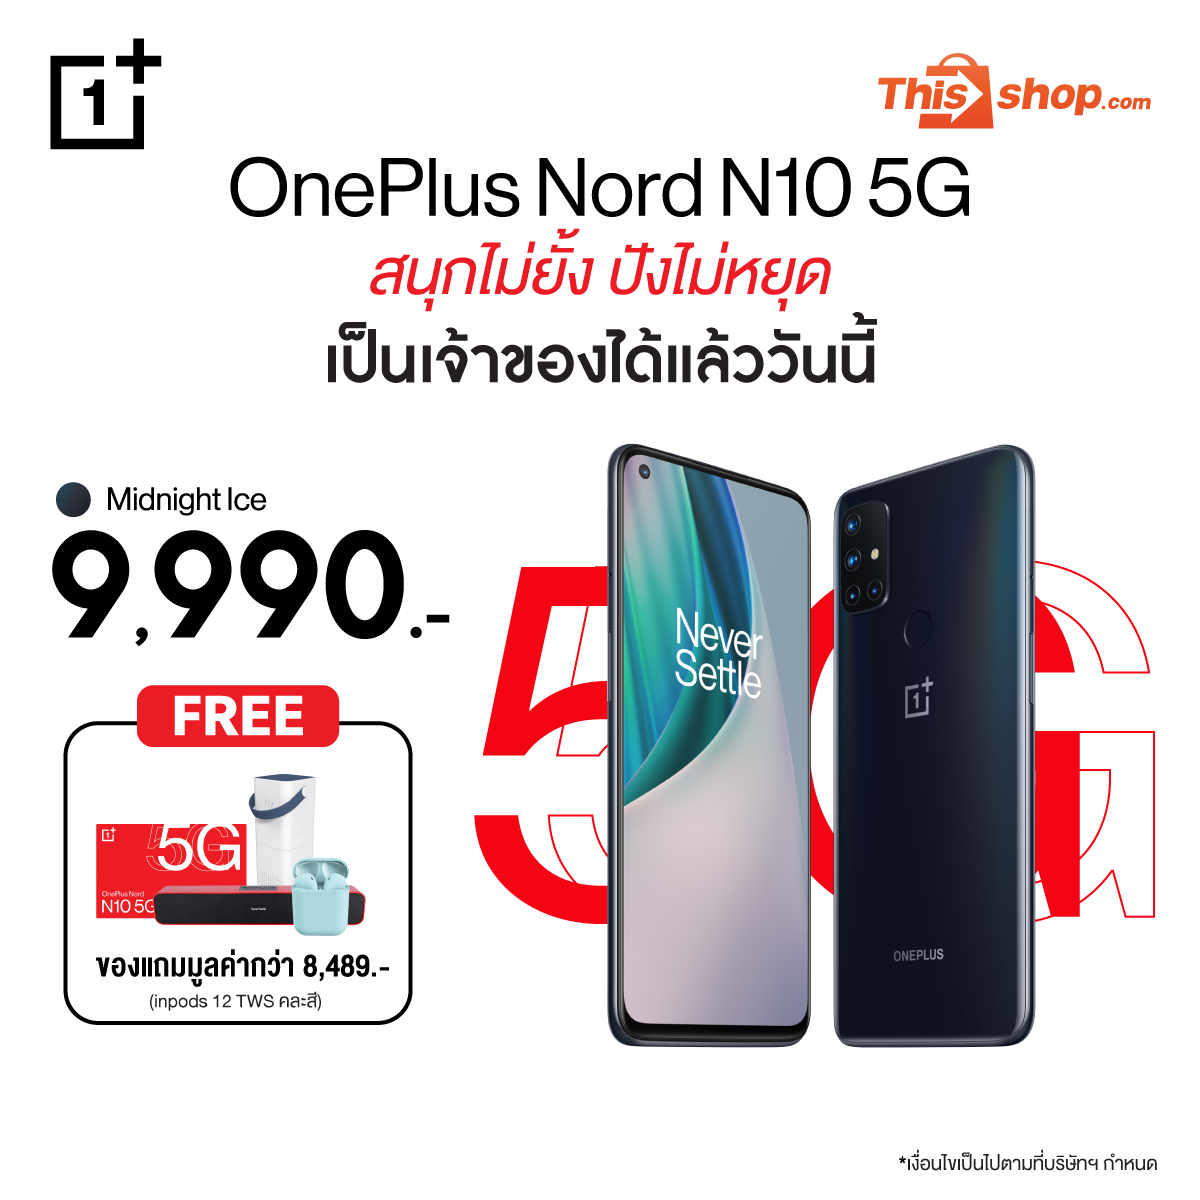 Thisshop N10 | 5G | รีวิว OnePlus Nord N10 5G สเปคครบ กล้องชัด 64ล้าน สมาร์ทโฟน 5G ระบบดี ในราคาไม่ถึงหมื่น